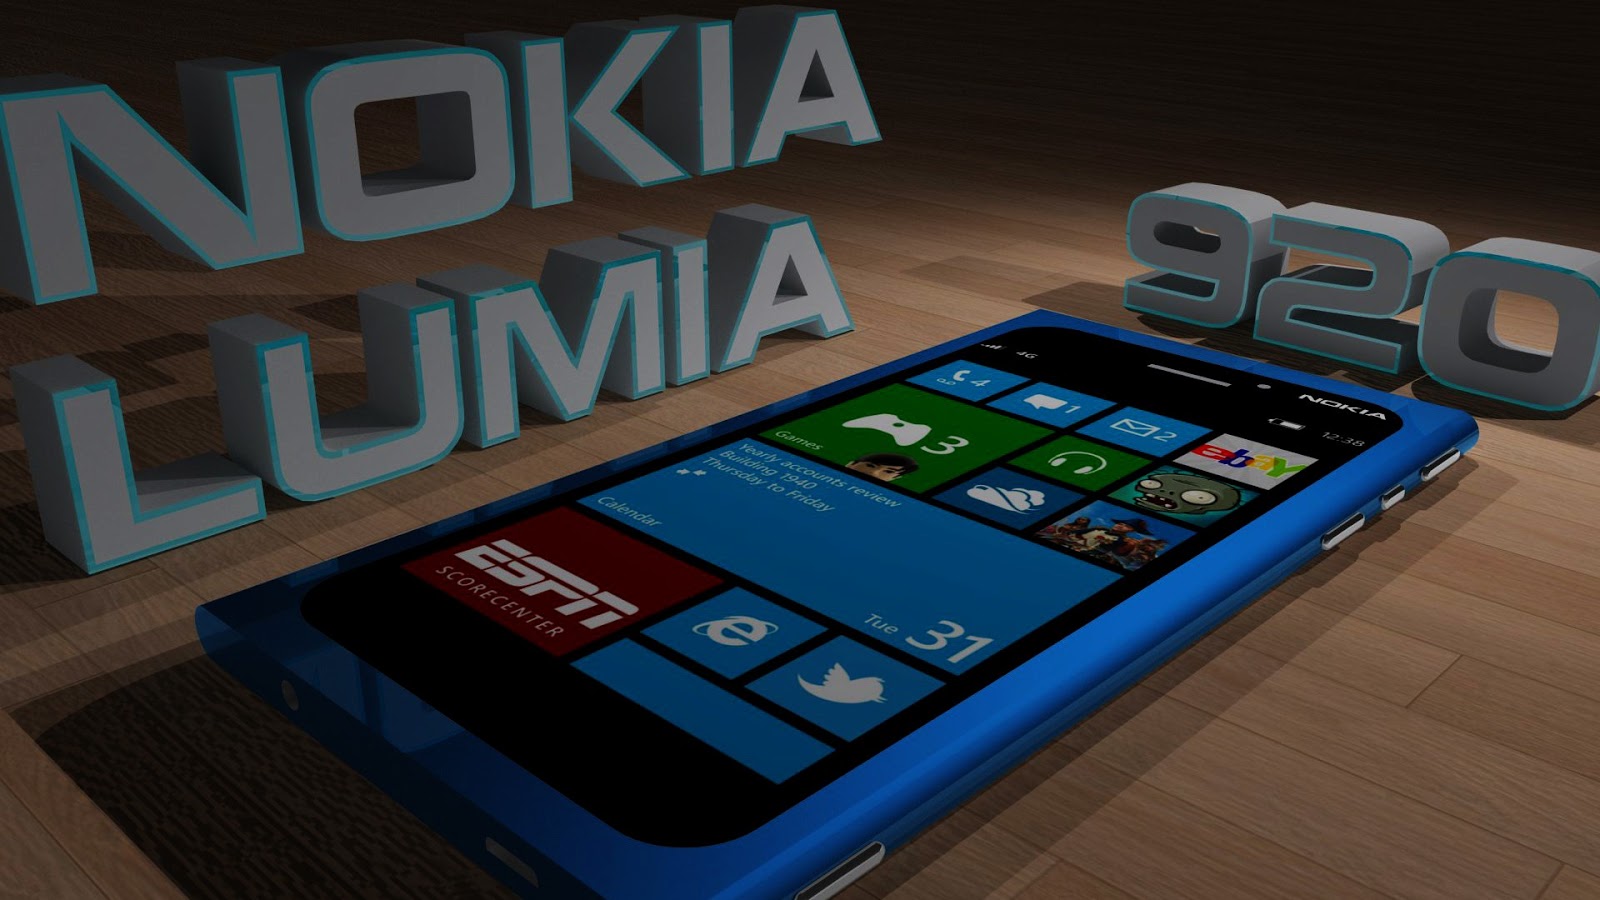 Nokia Lumia Mobile Phone Wallpaper Nice